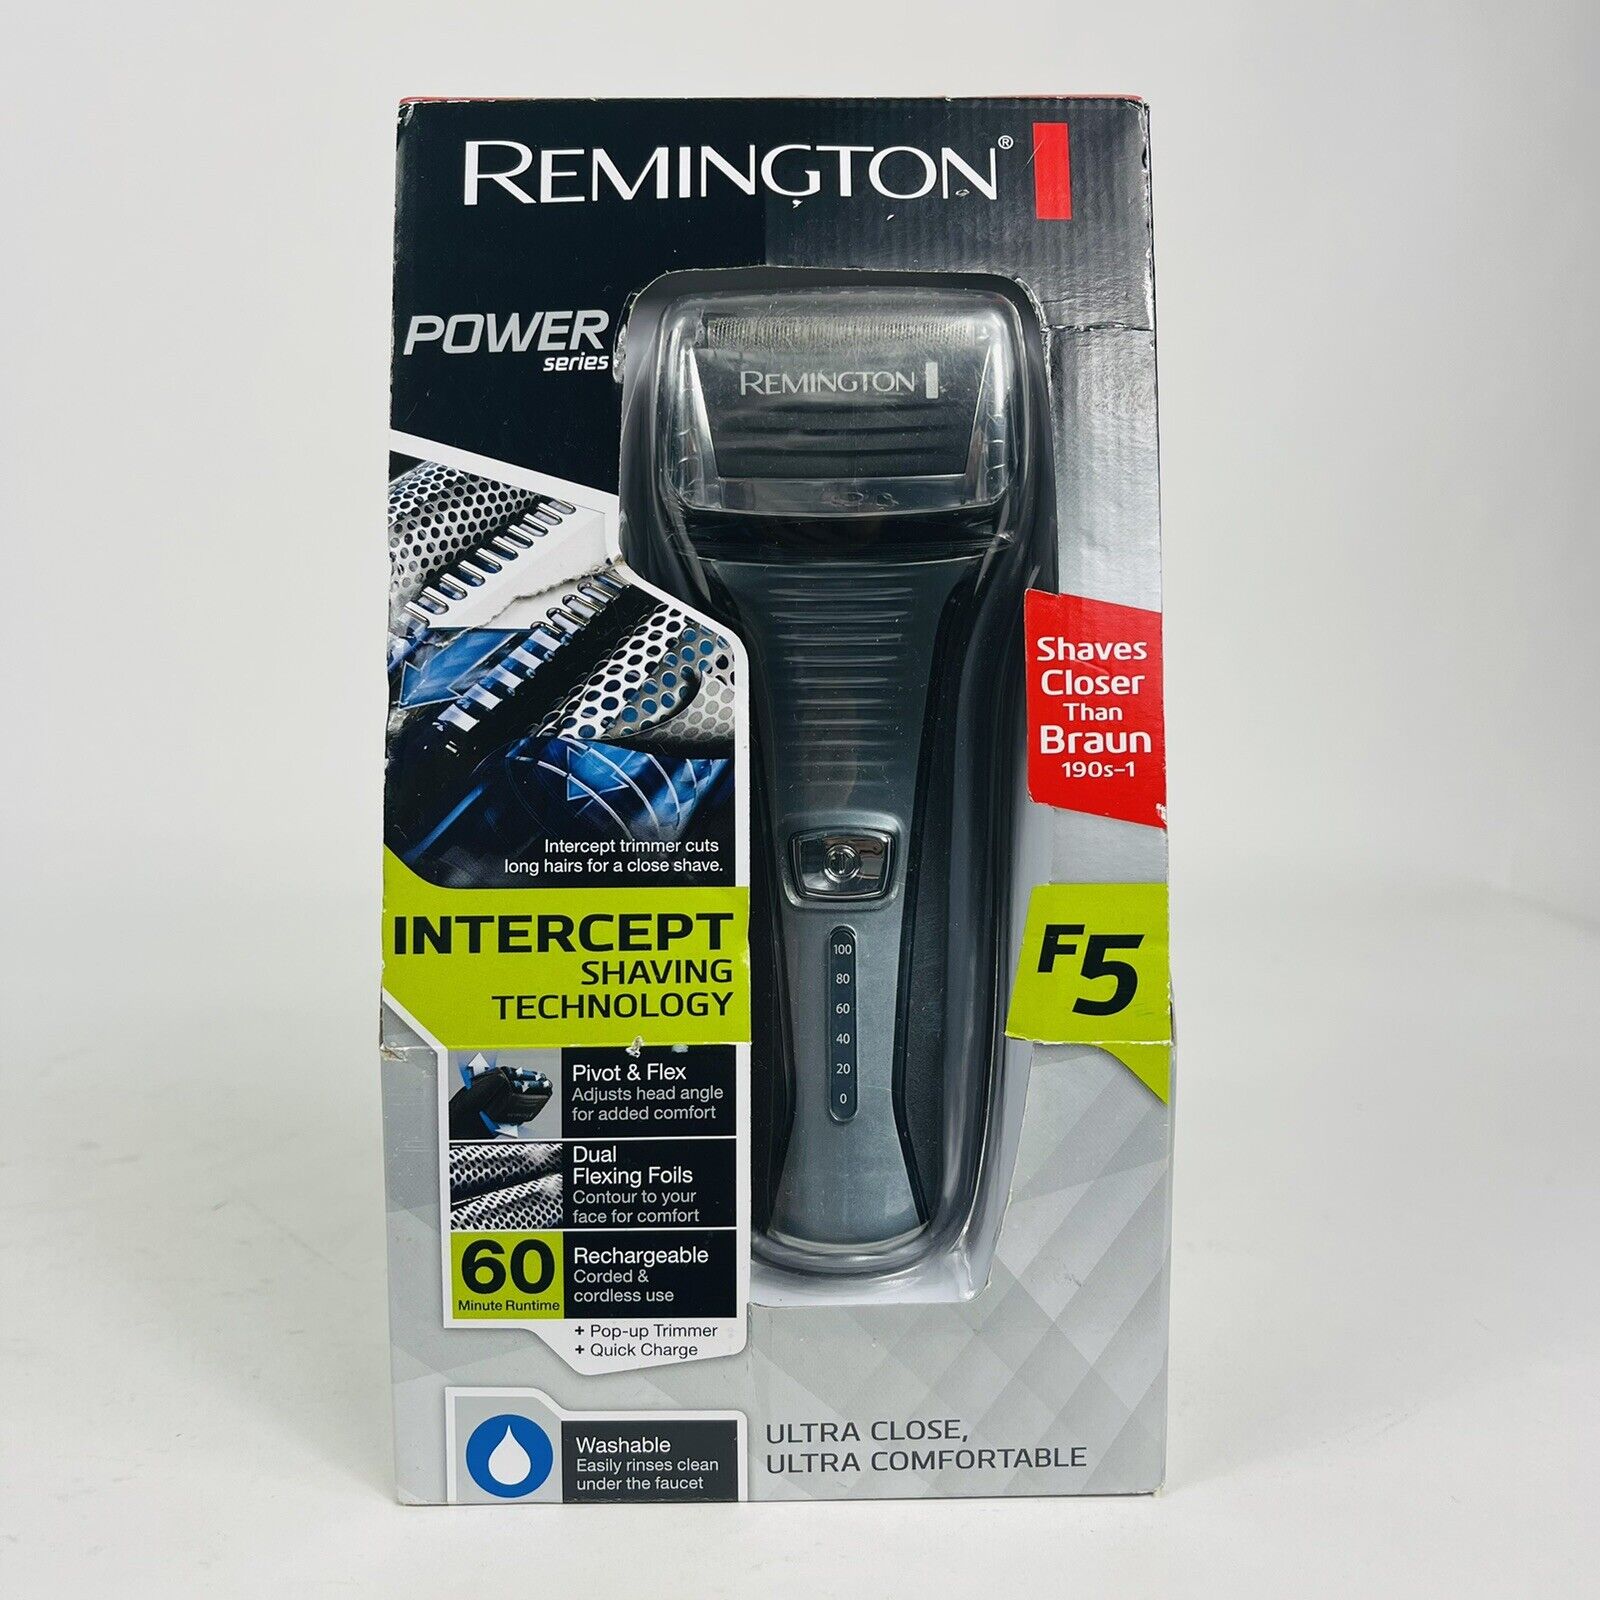 Remington F5 Foil Shaver with Intercept Shaving Technology, Black, F5-5800B